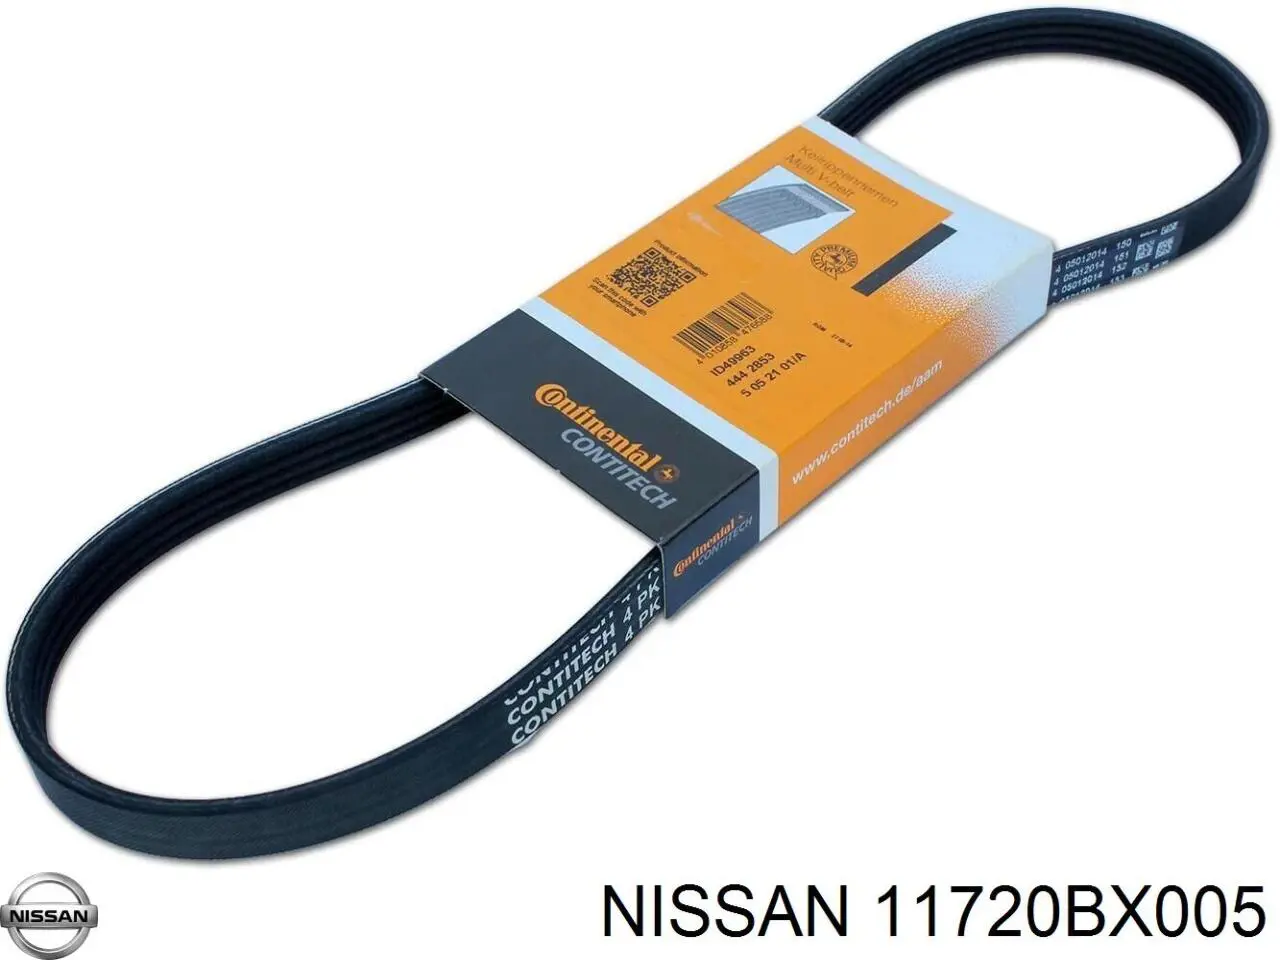 11720BX005 Nissan correa trapezoidal